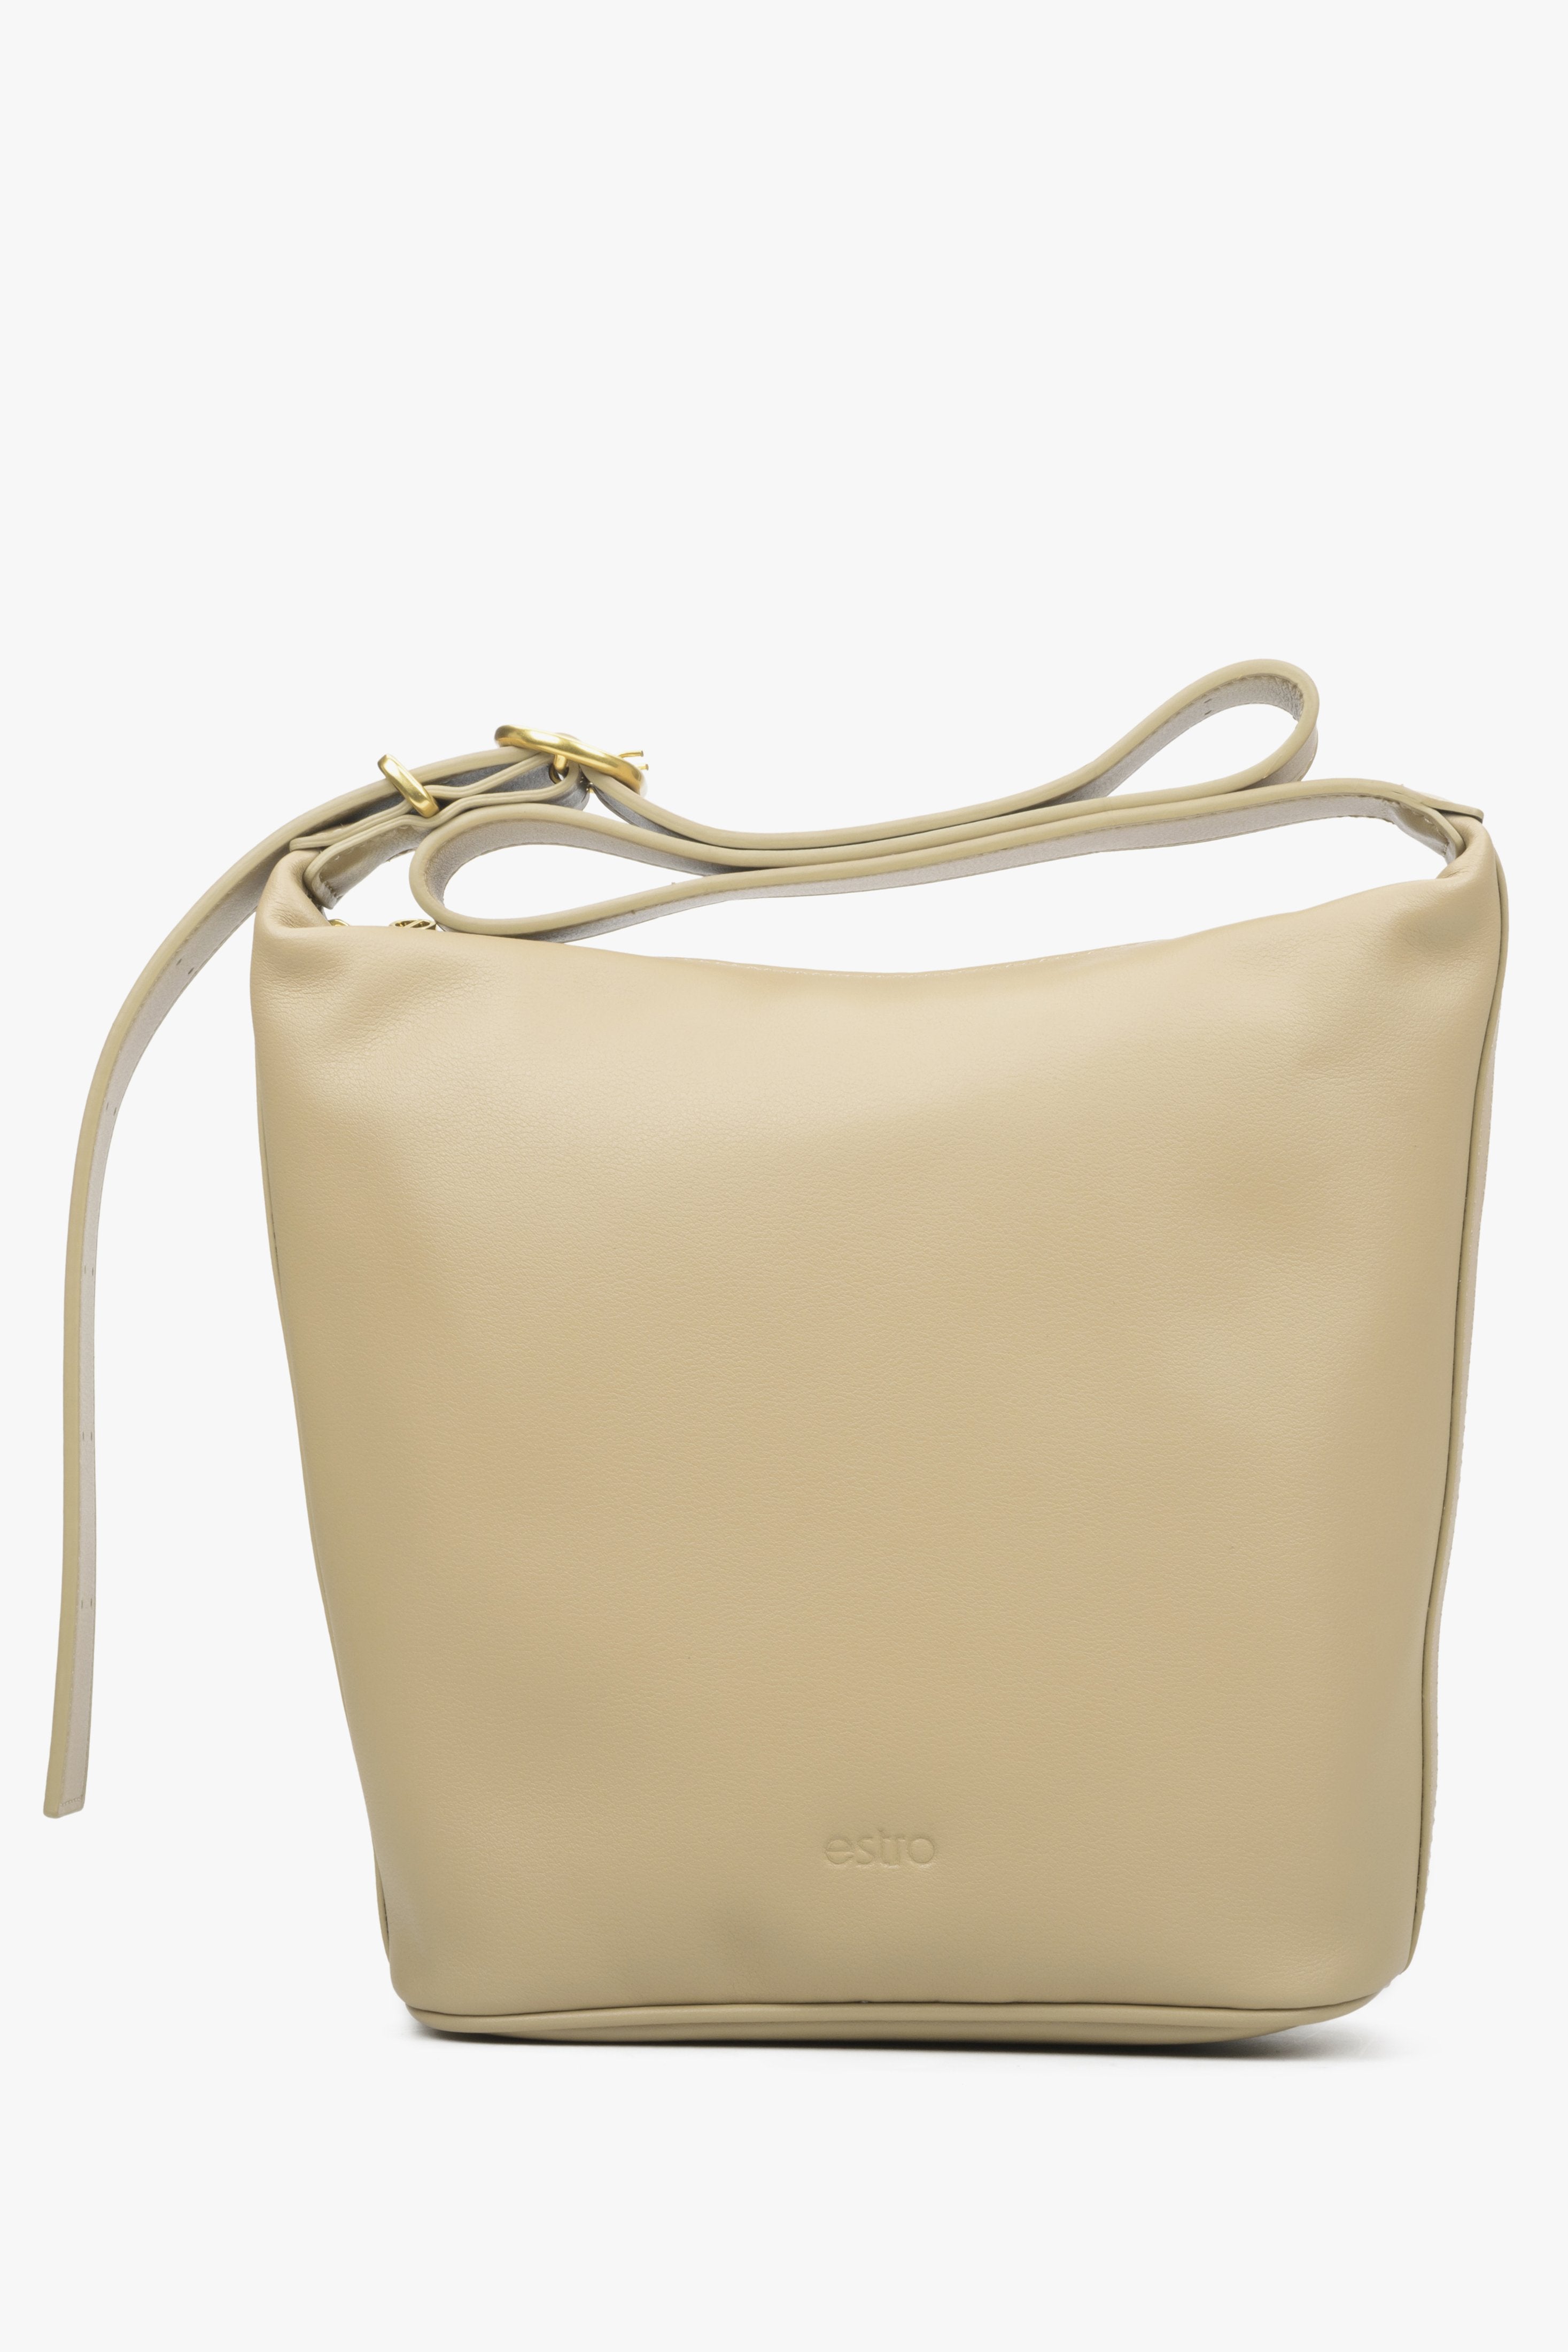 Beżowa torebka na ramię typu worek ze skóry naturalnej Estro ER00114431